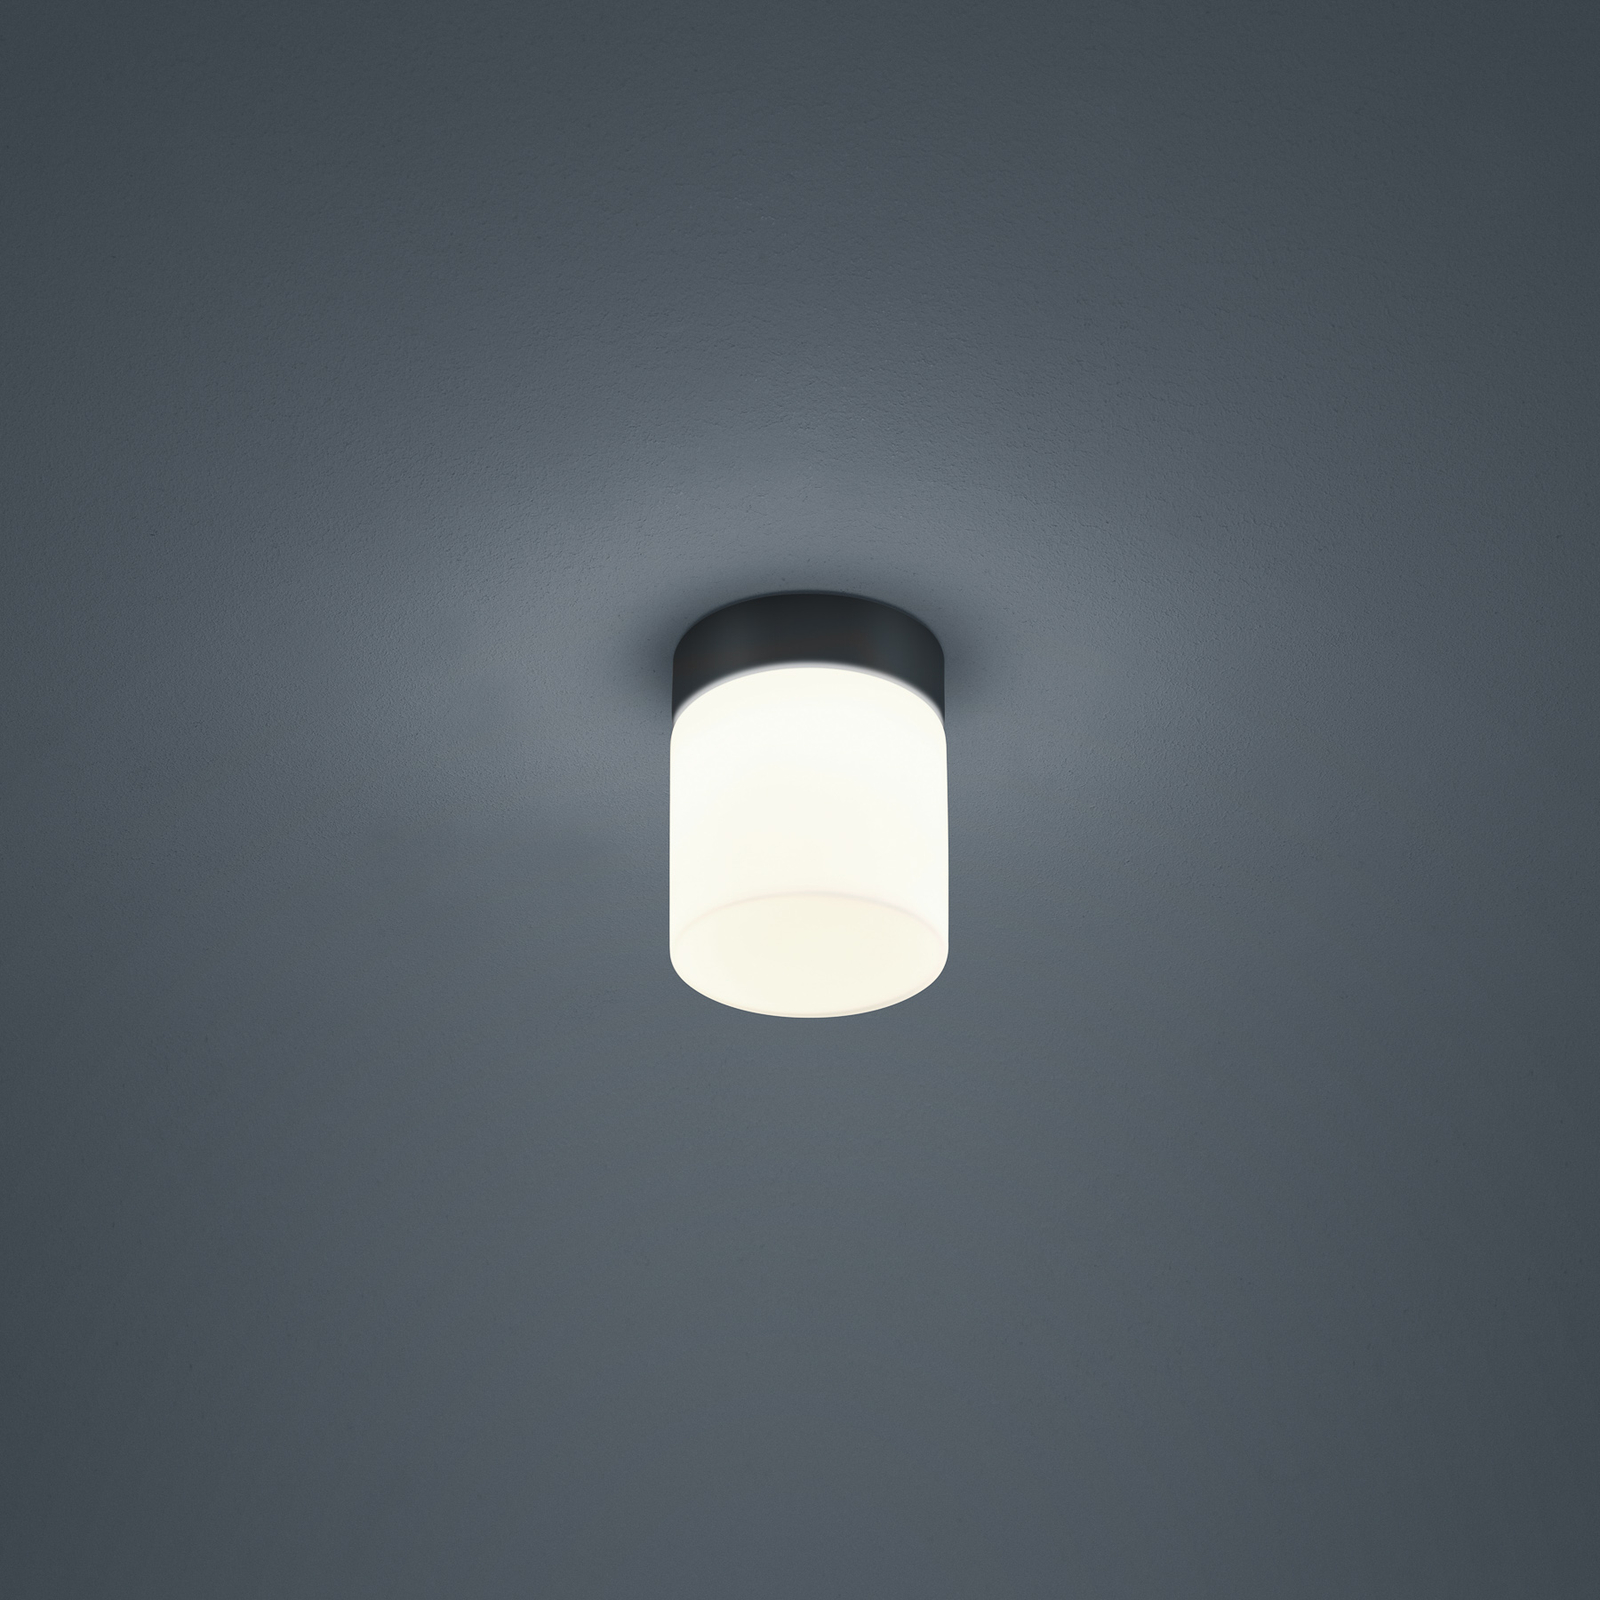 Helestra Keto LED ceiling light, cylinder, black